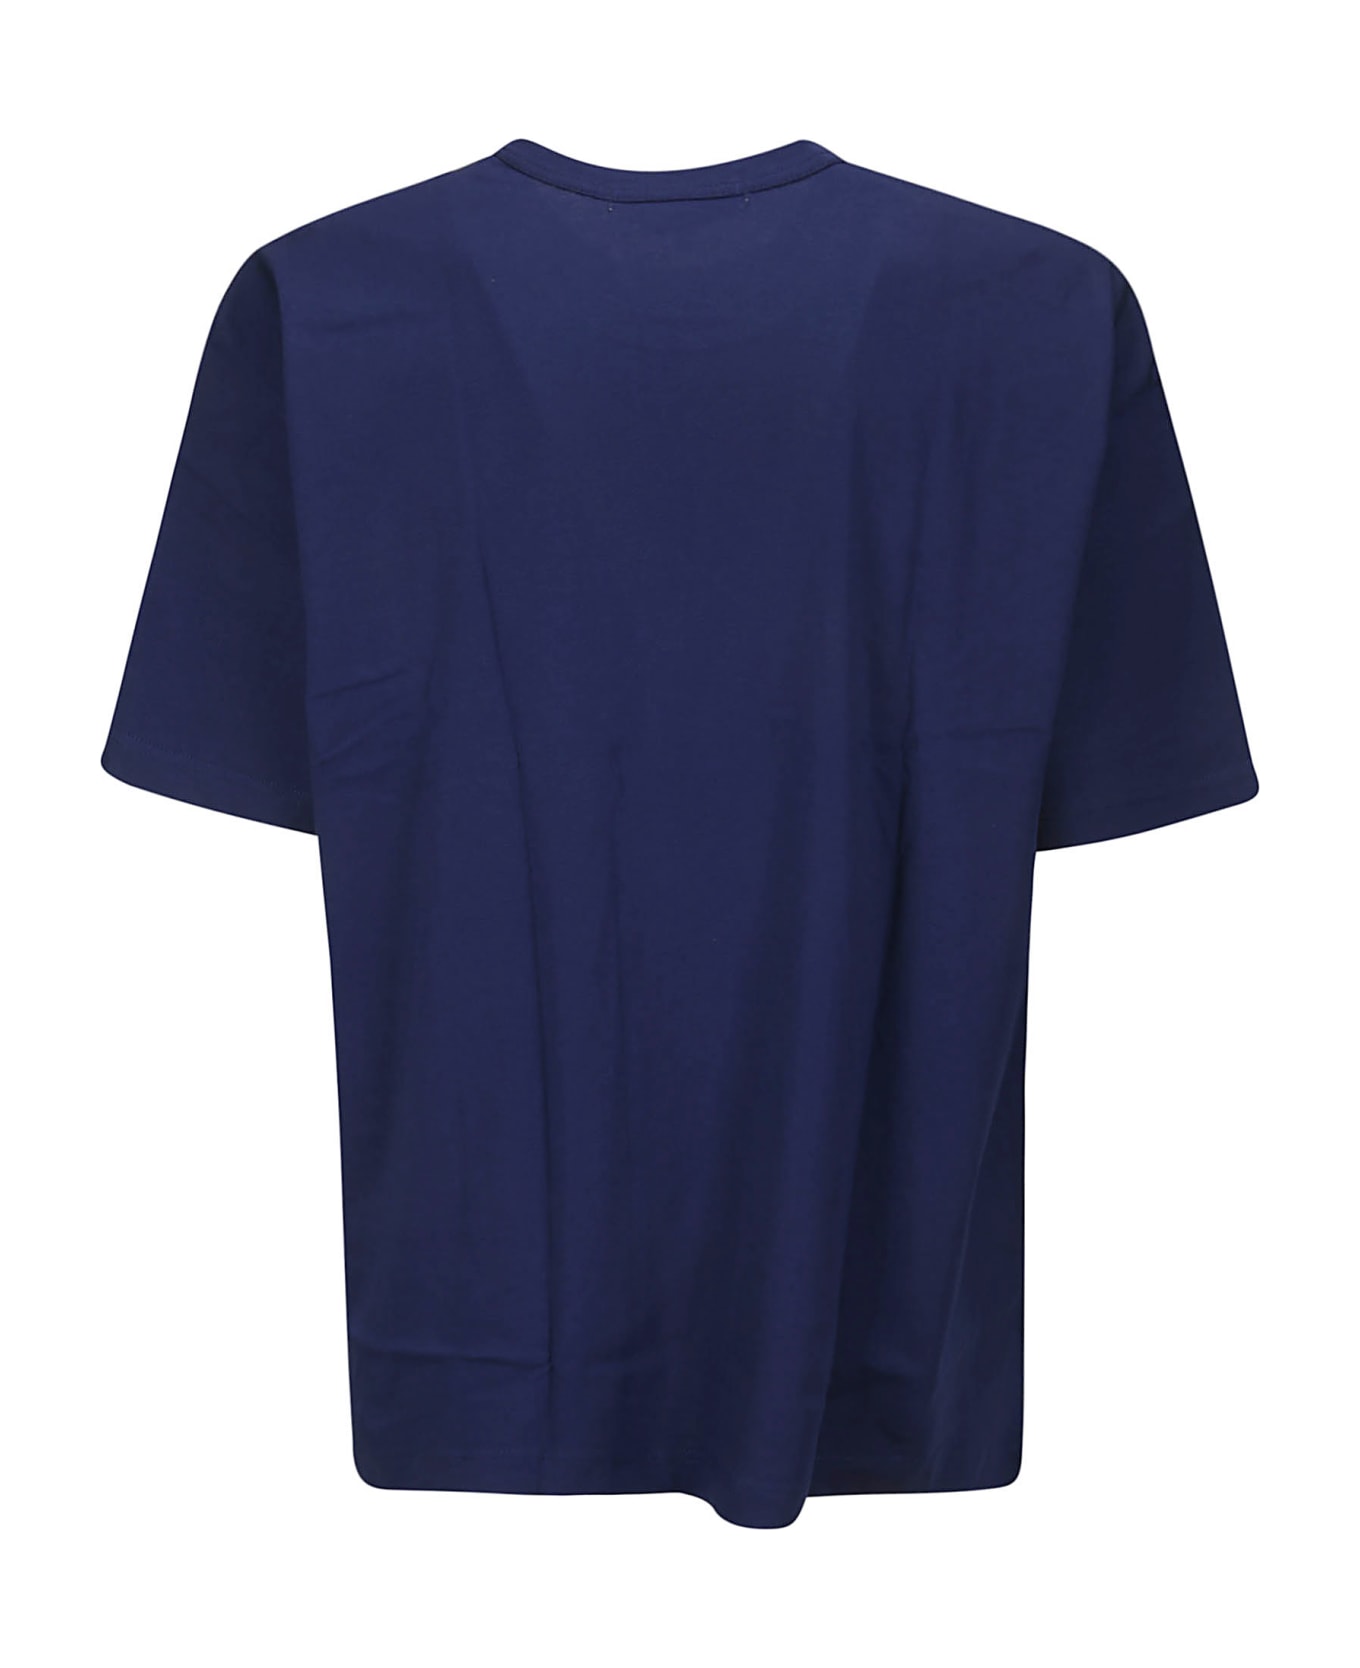 Comme des Garçons Shirt Cotton Jersey Plain With Printed Cdg Shirt L - NAVY